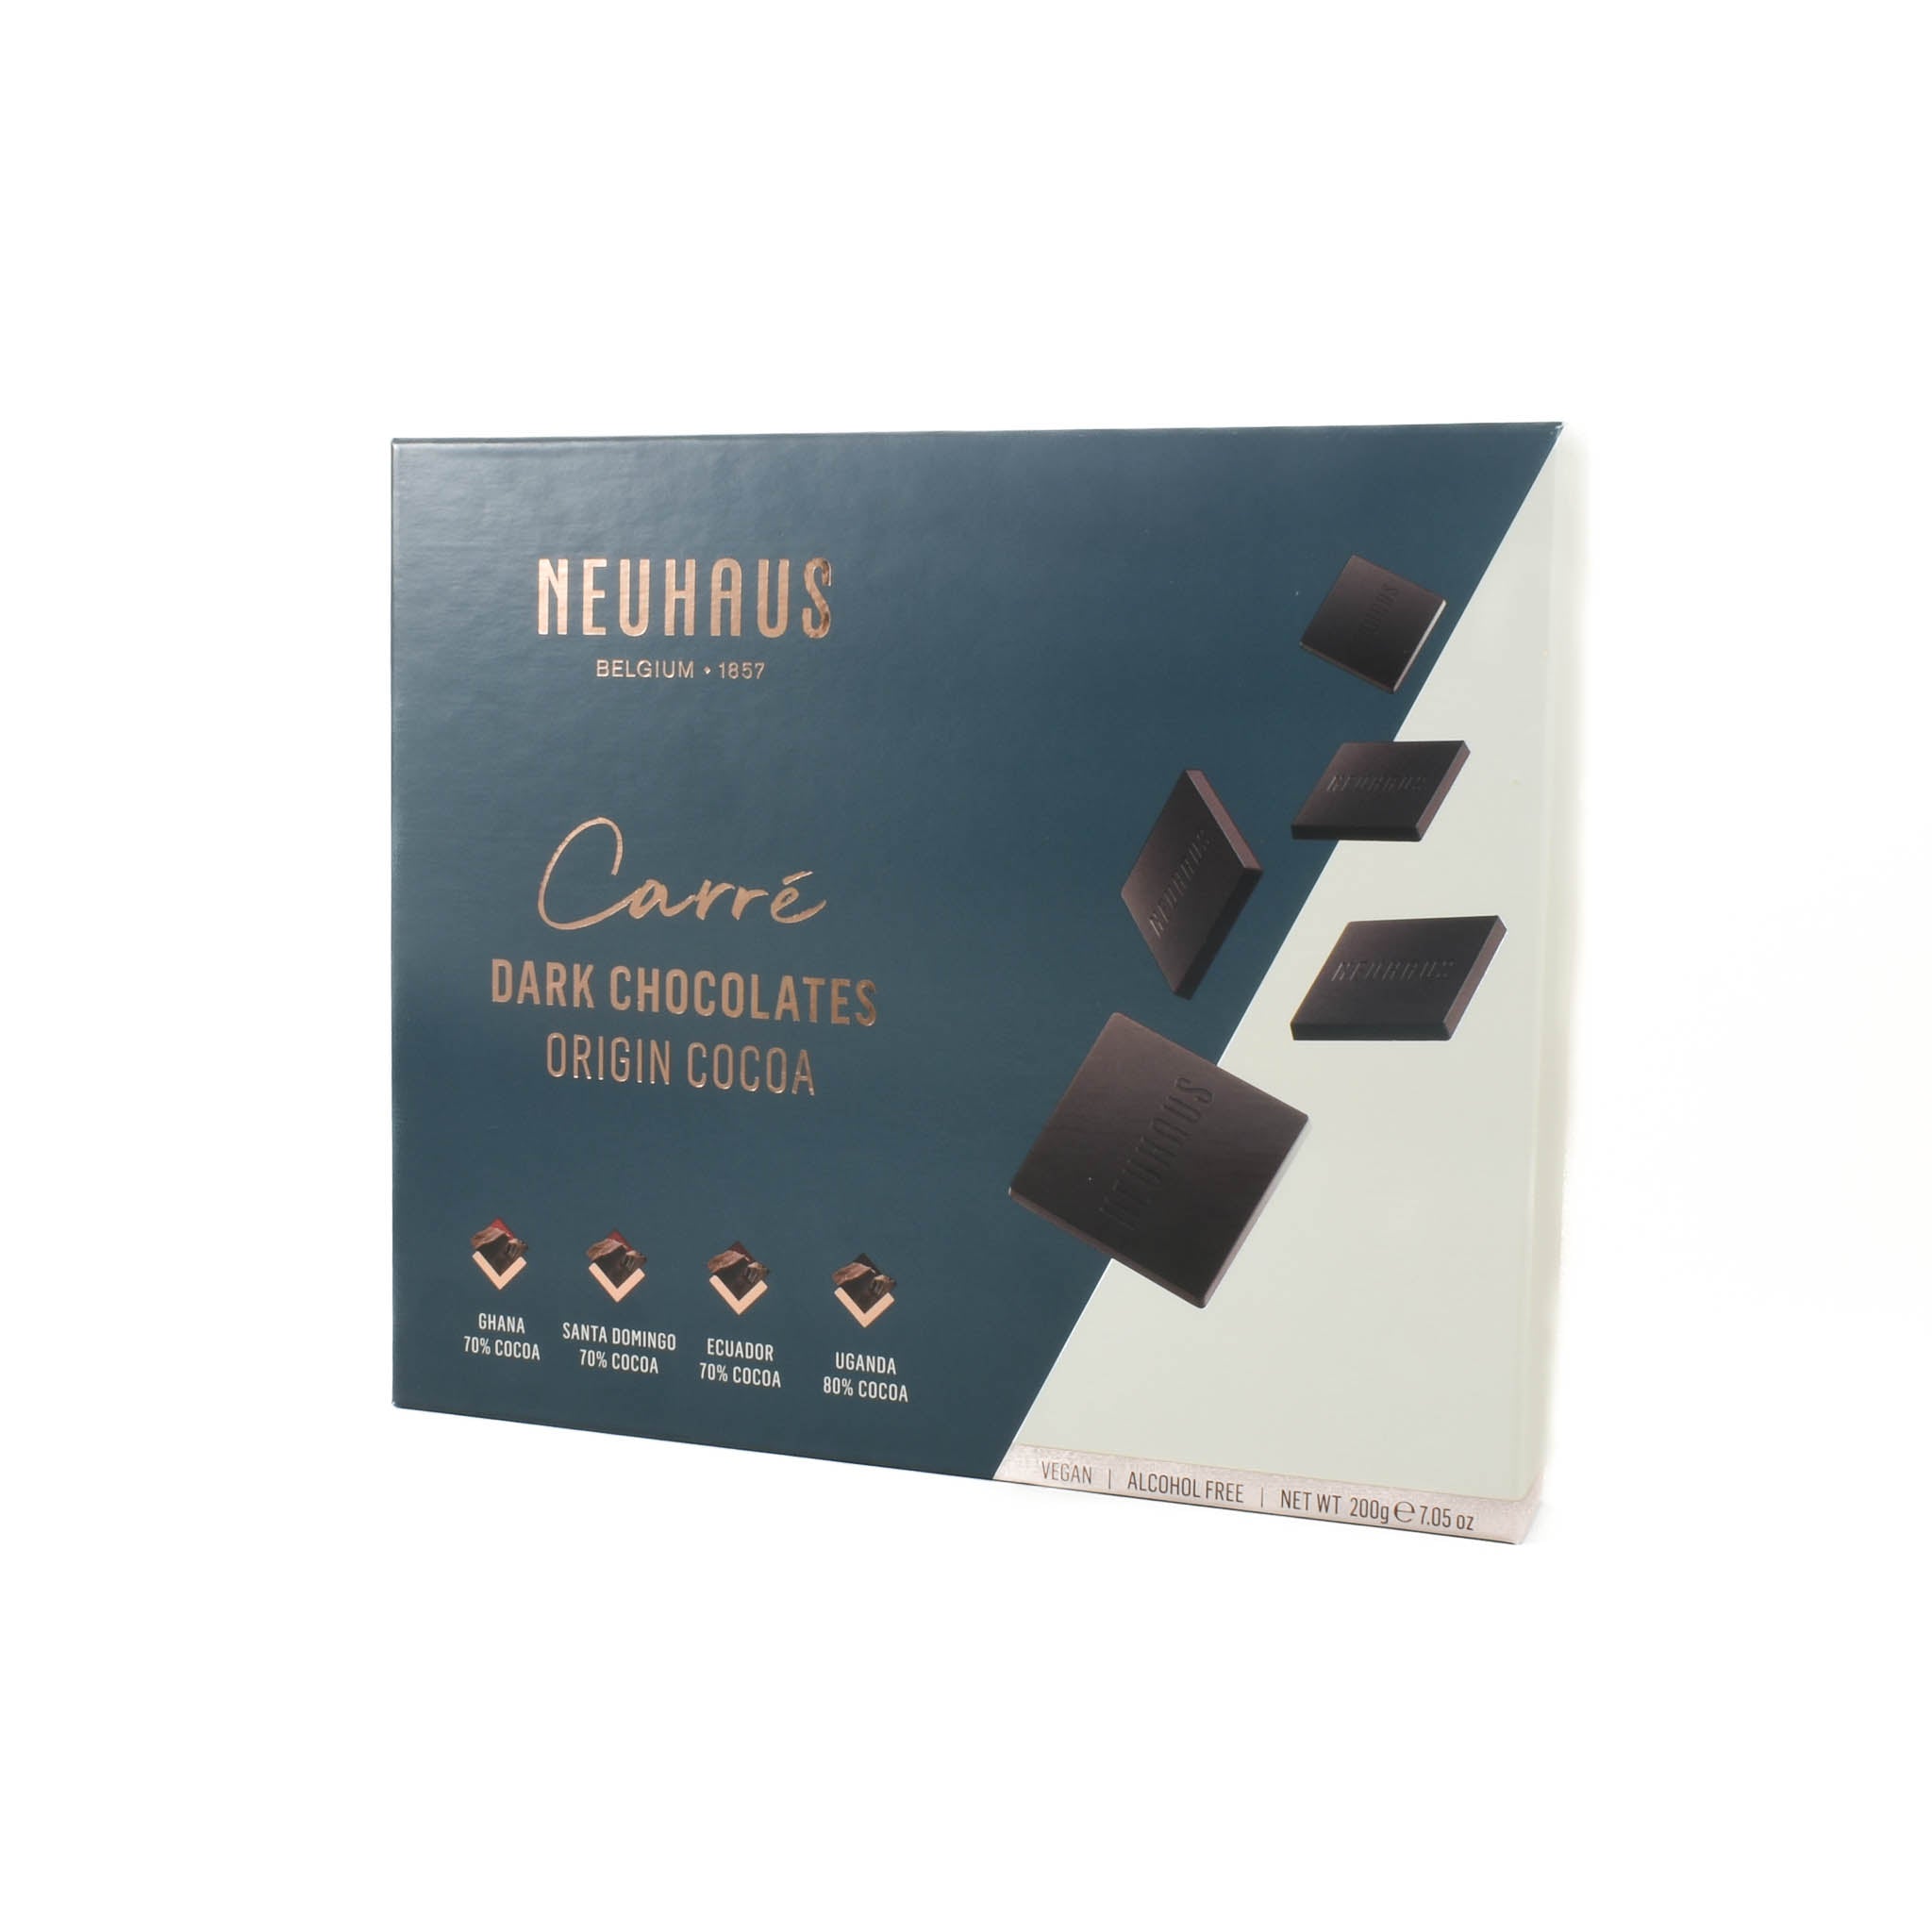 Neuhaus "Carre Origin" Dark Chocolate (Vegan), 200g